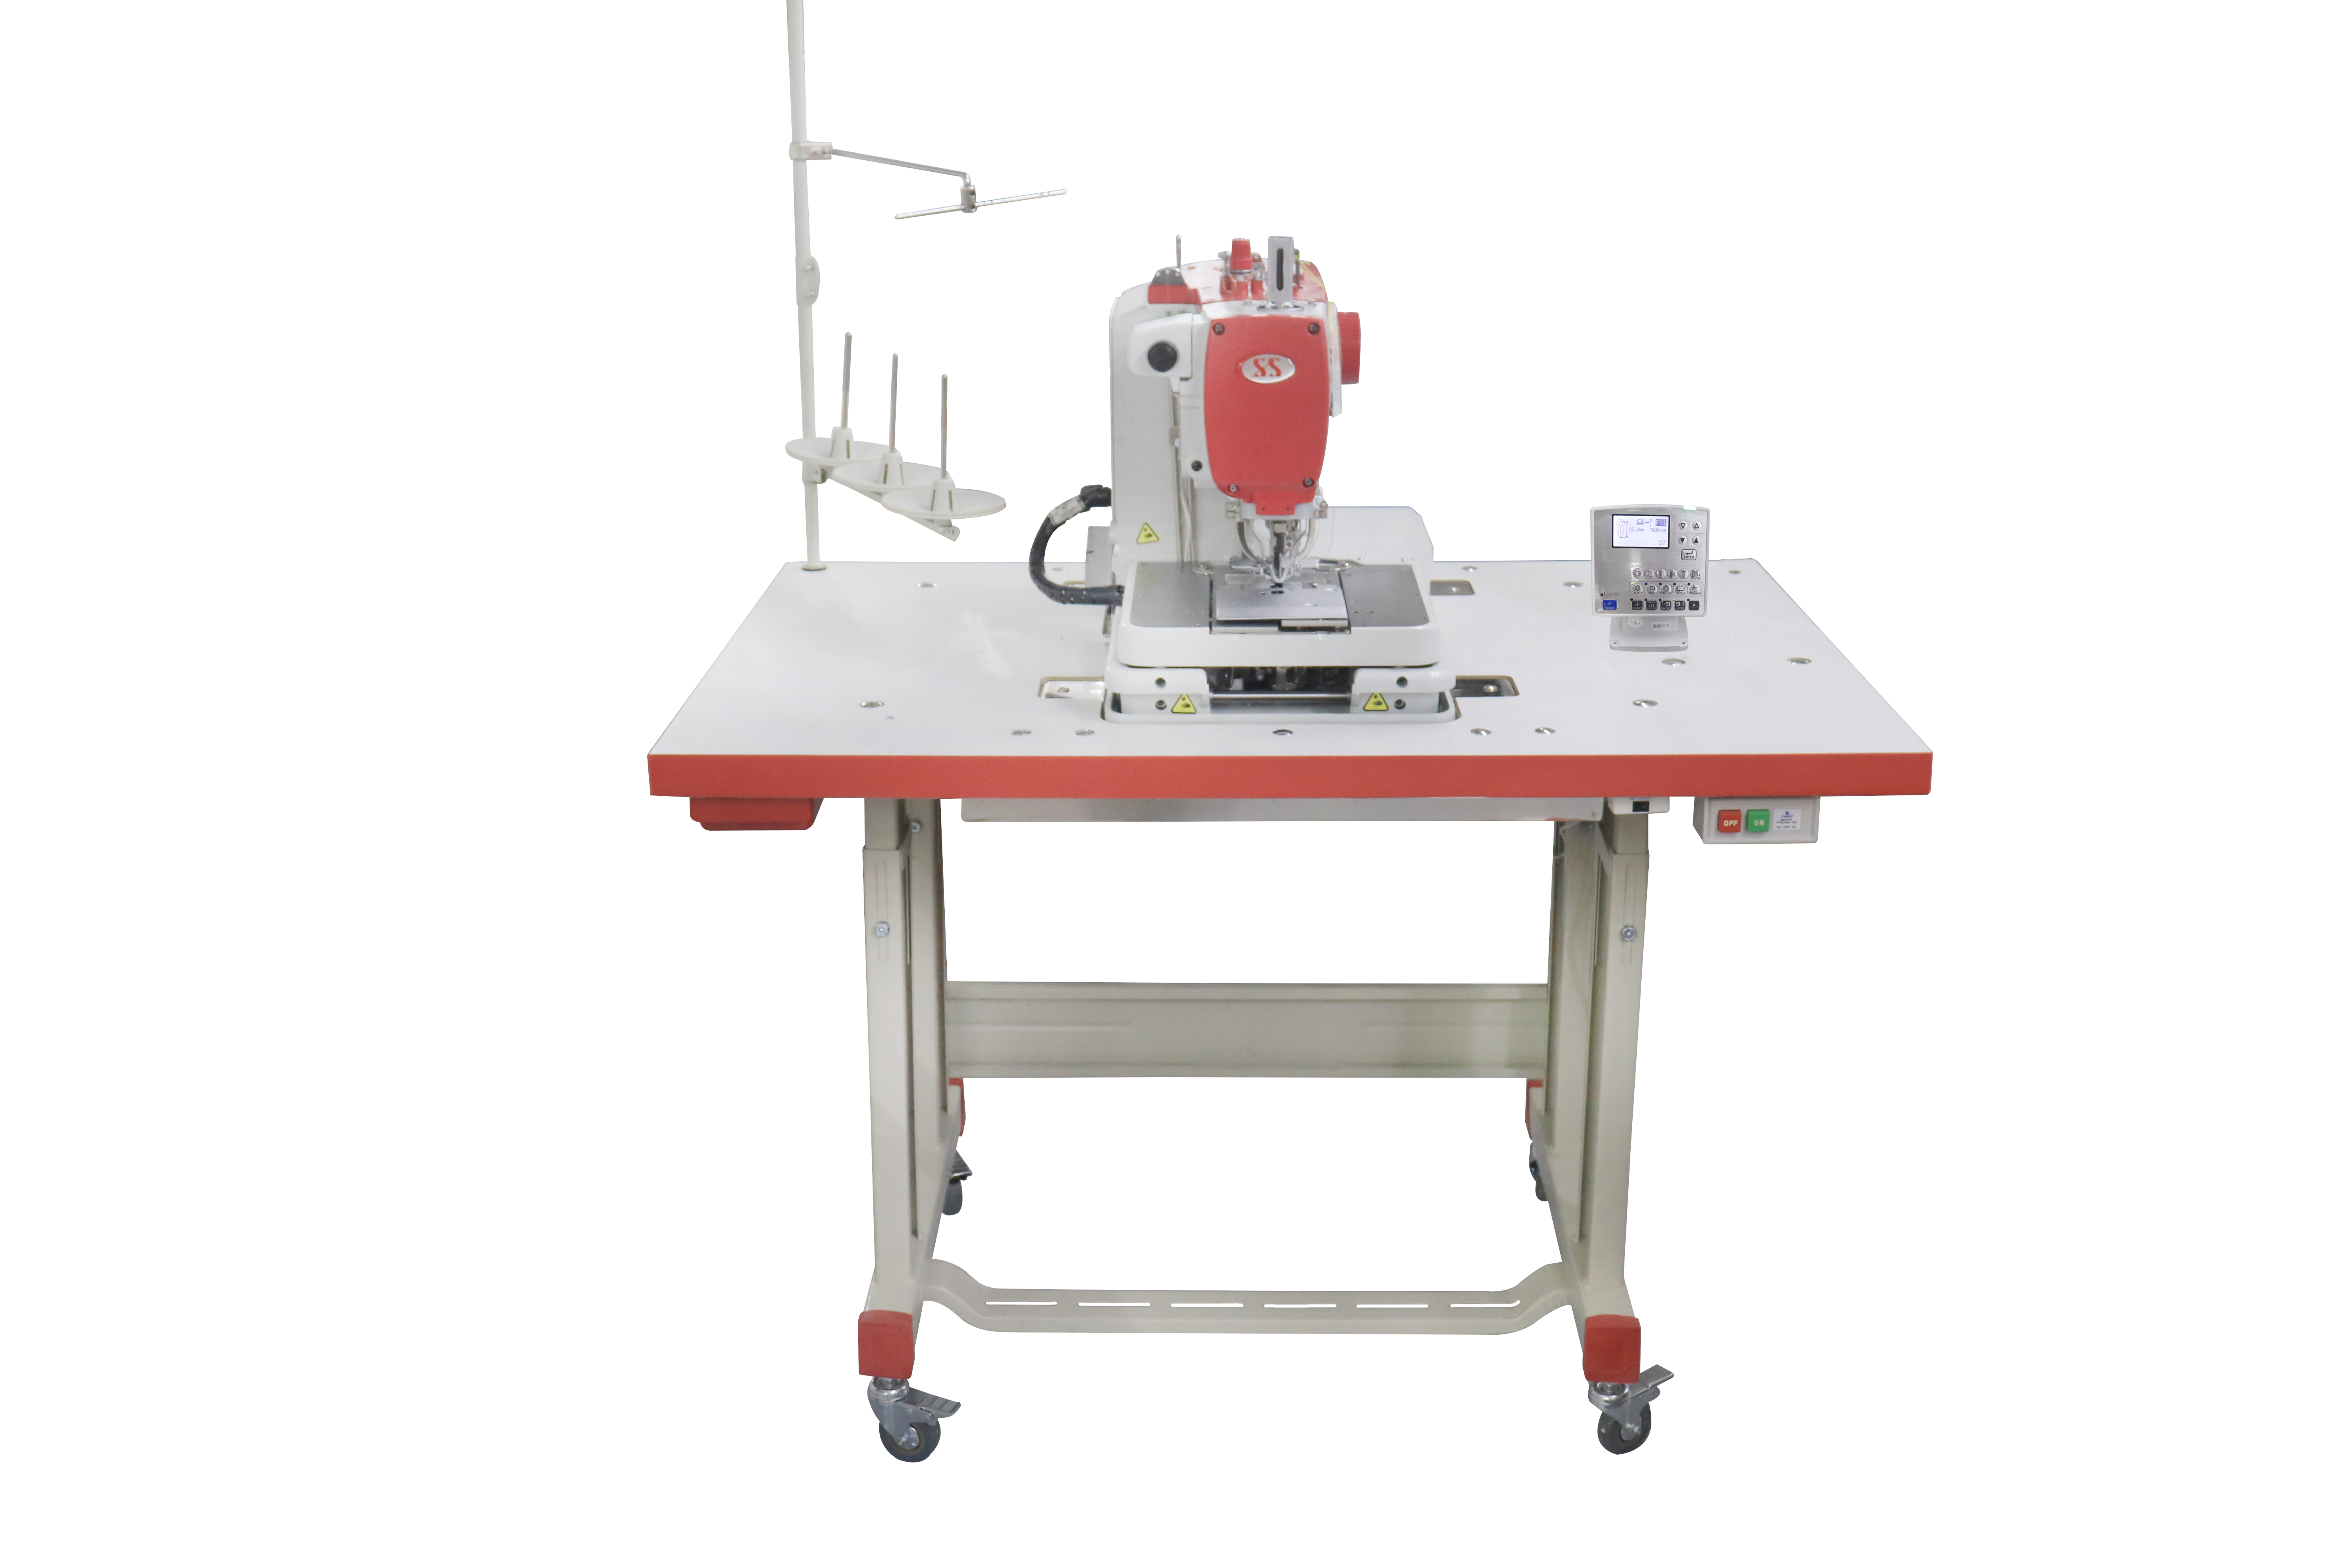 Máquina Costura Industrial Caseadeira Olho Eletrônica SS9820-02 - Sun Special